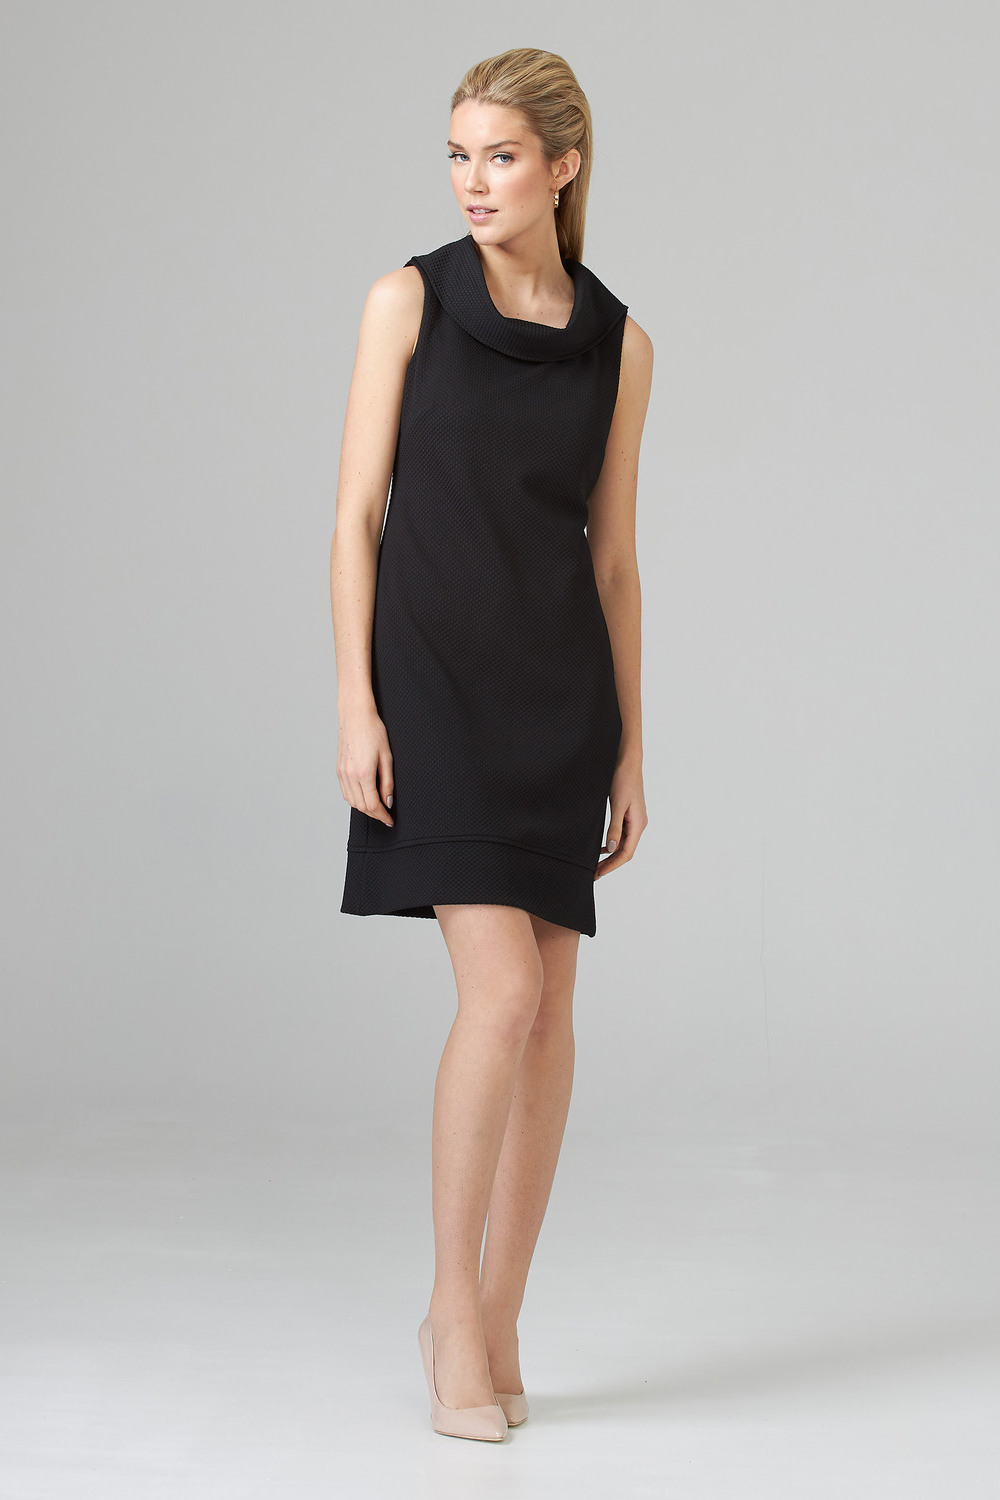 Joseph Ribkoff Dress Style 201232. Black